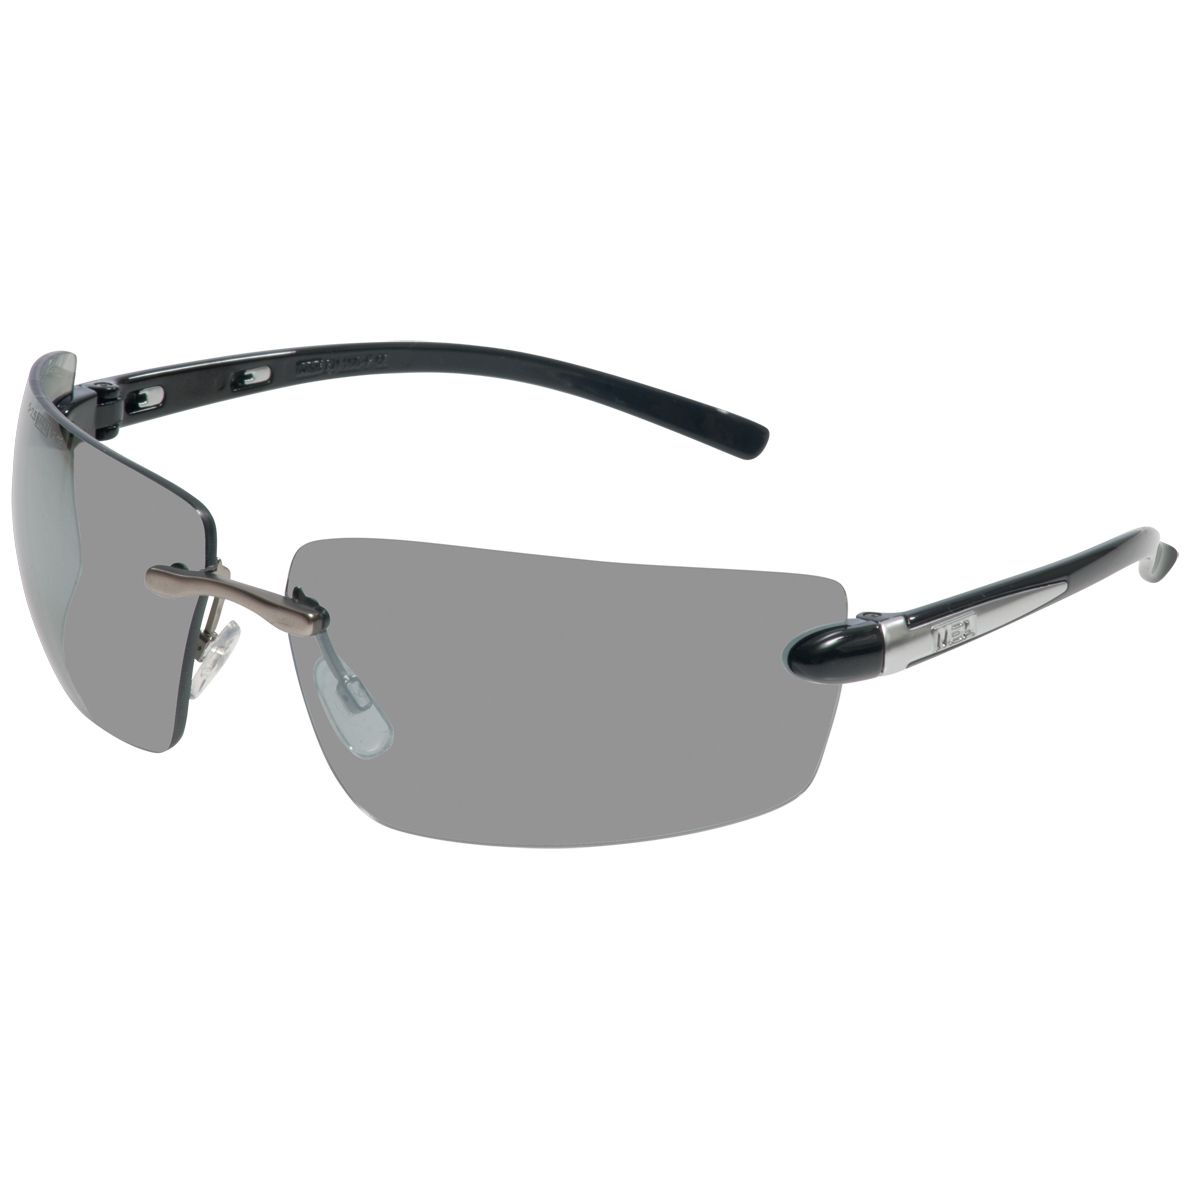 MSA Alaska Schutzbrille - kratz- & beschlagfest dank Sightgard-Beschichtung - EN 166/172 - Schwarz/Silberspiegel